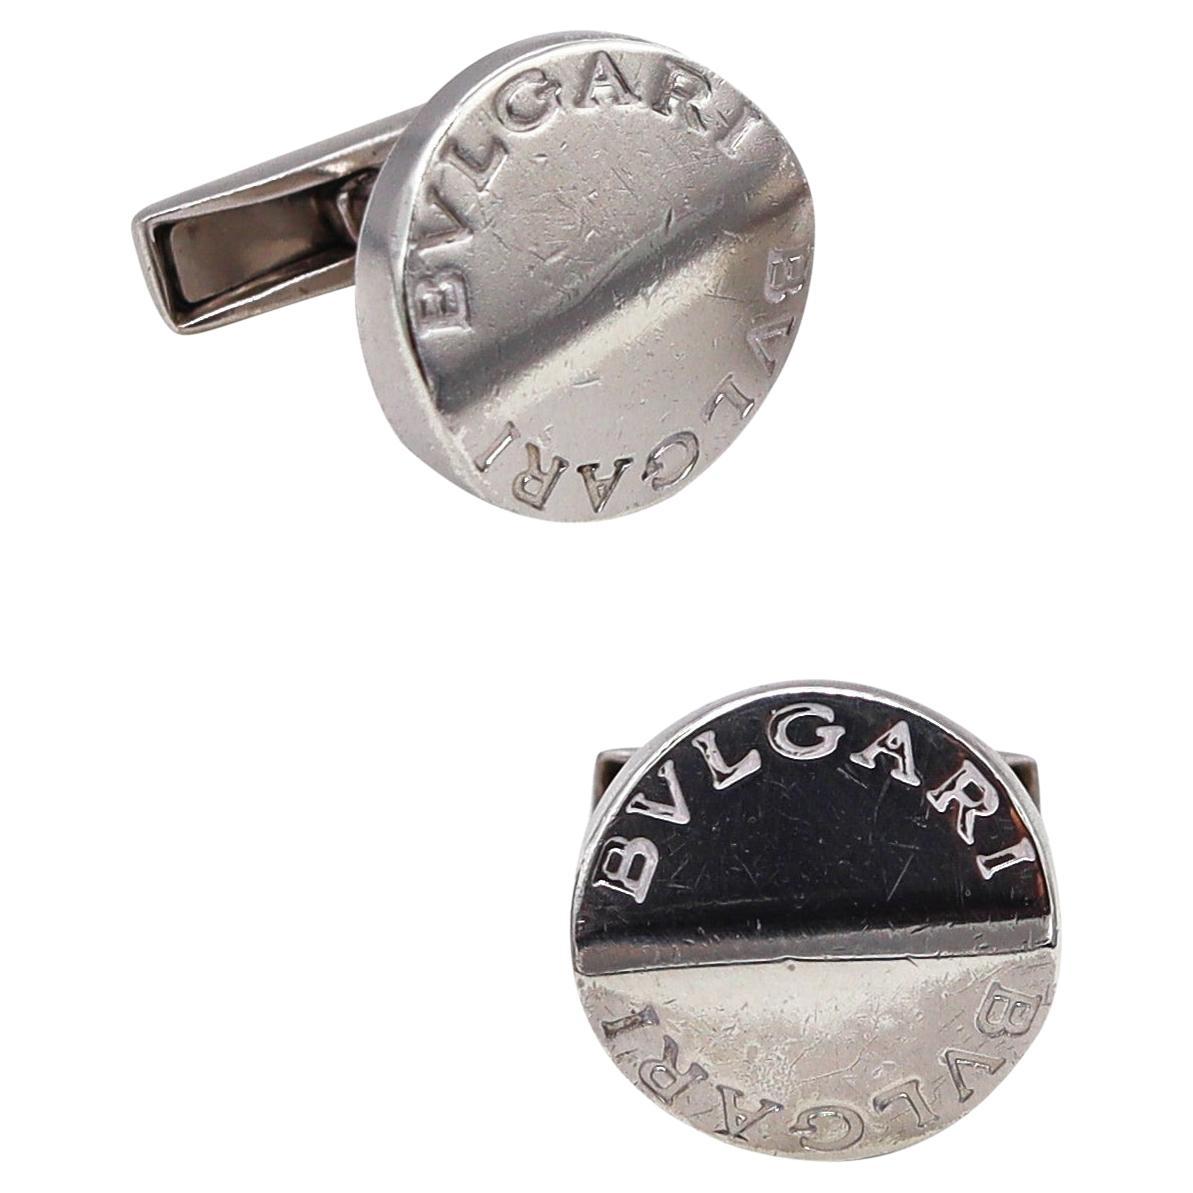 Bvlgari Roma Vintage Pair of Cufflinks in Solid .925 Sterling Silver